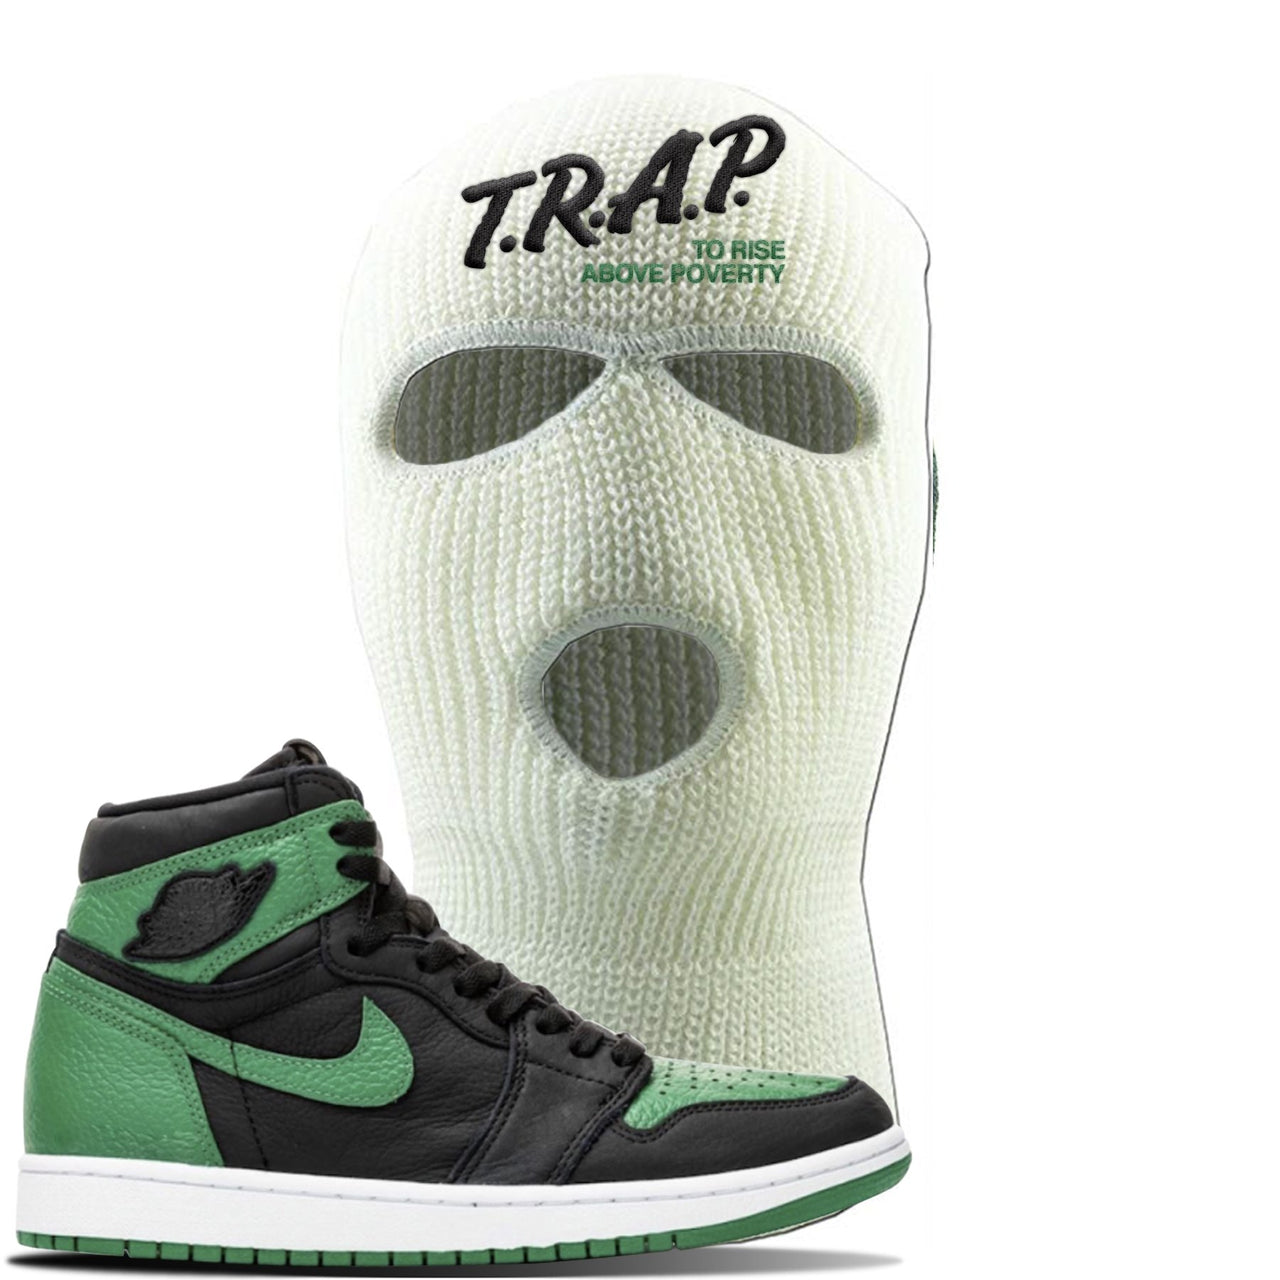 Jordan 1 Retro High OG Pine Green Gym Sneaker White Ski Mask | Hat to match Air Jordan 1 Retro High OG Pine Green Gym Shoes | Trap To Rise Above Poverty